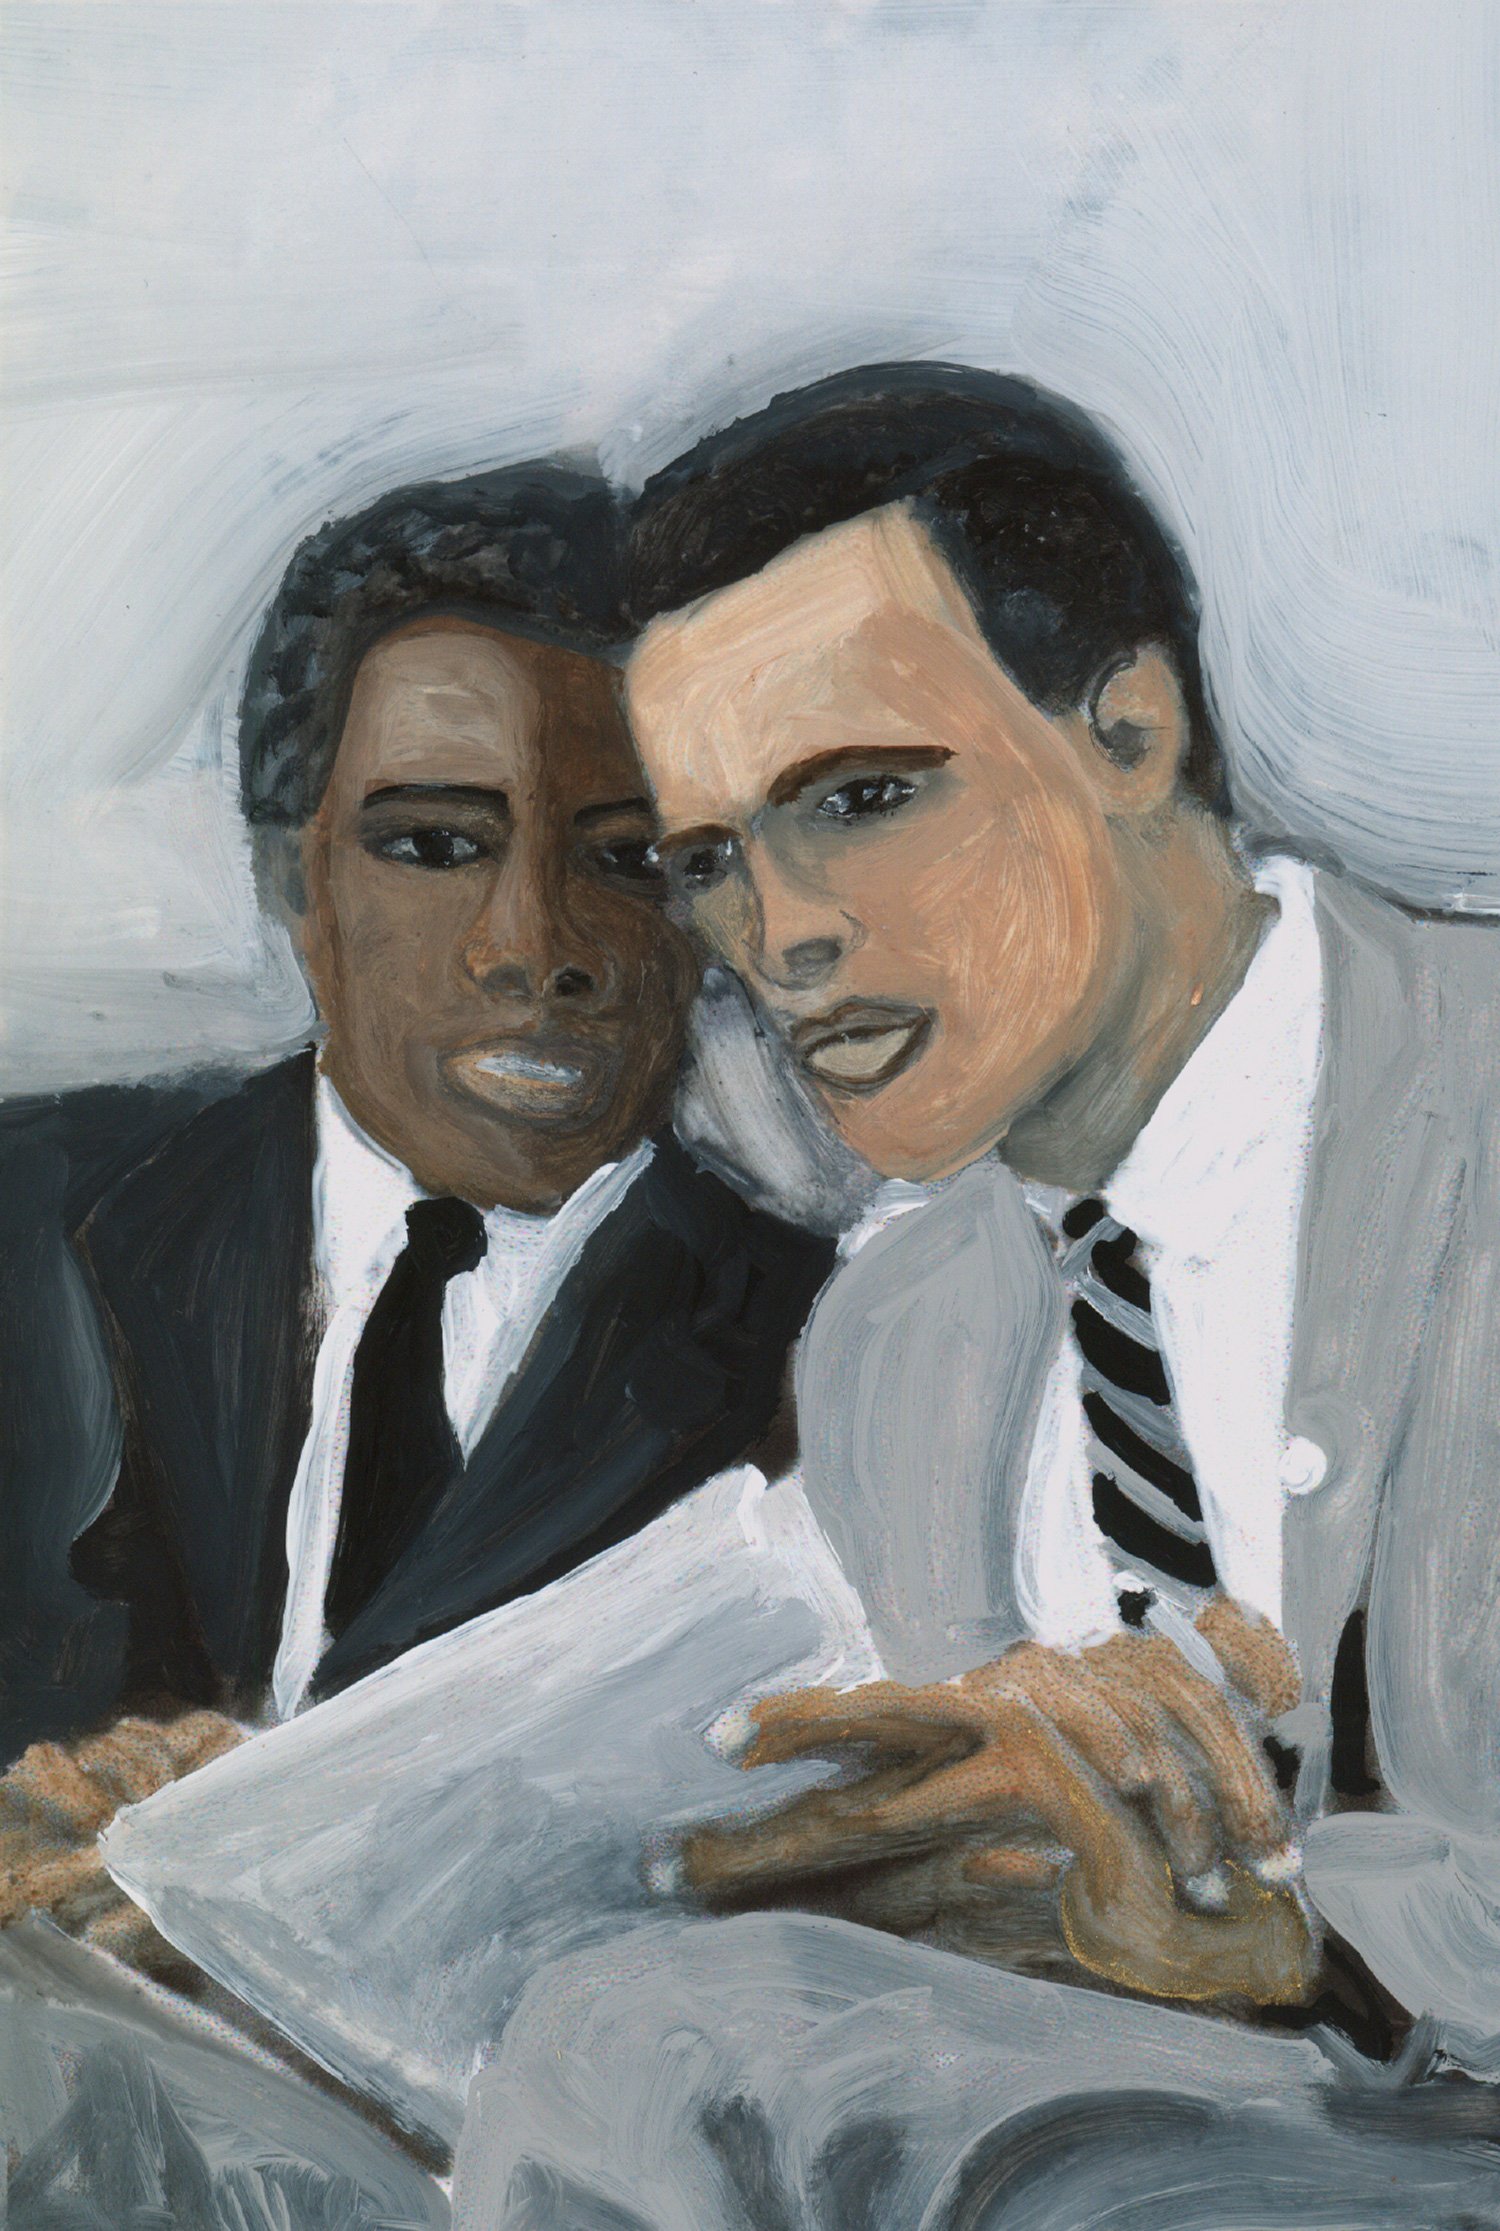 Sidney Poitier & Harry Belafonte